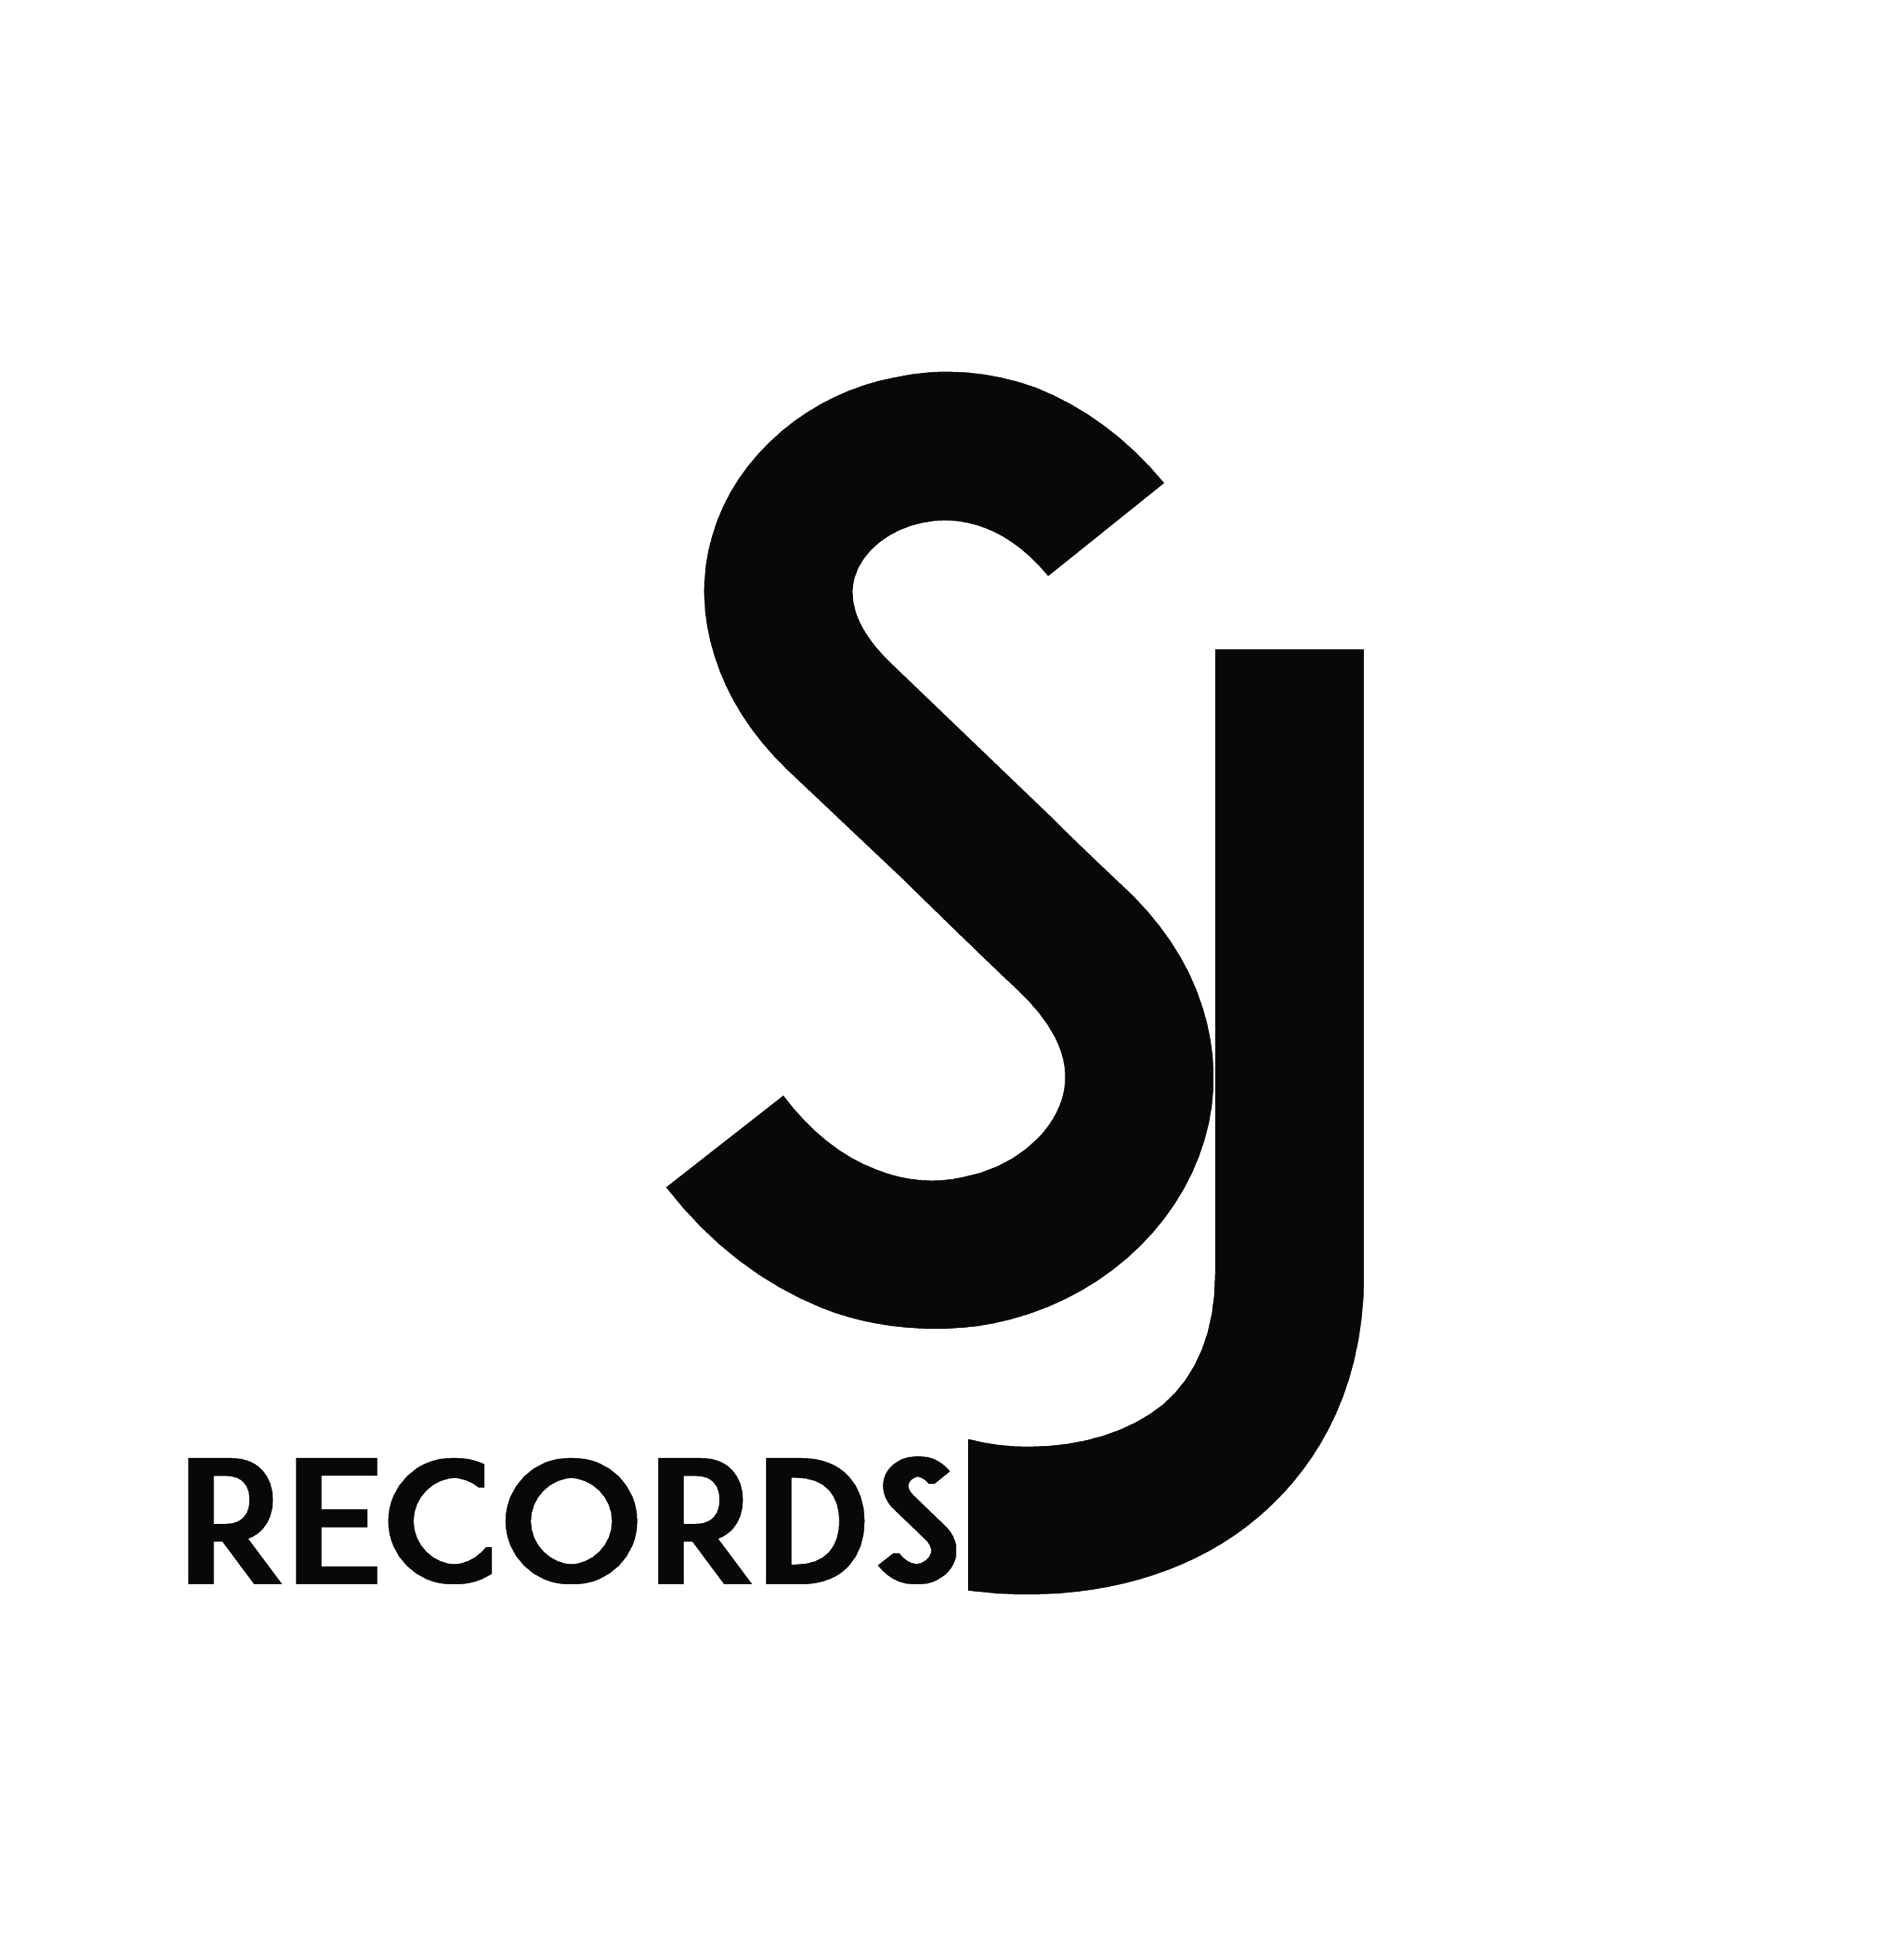 Secret Jams Records